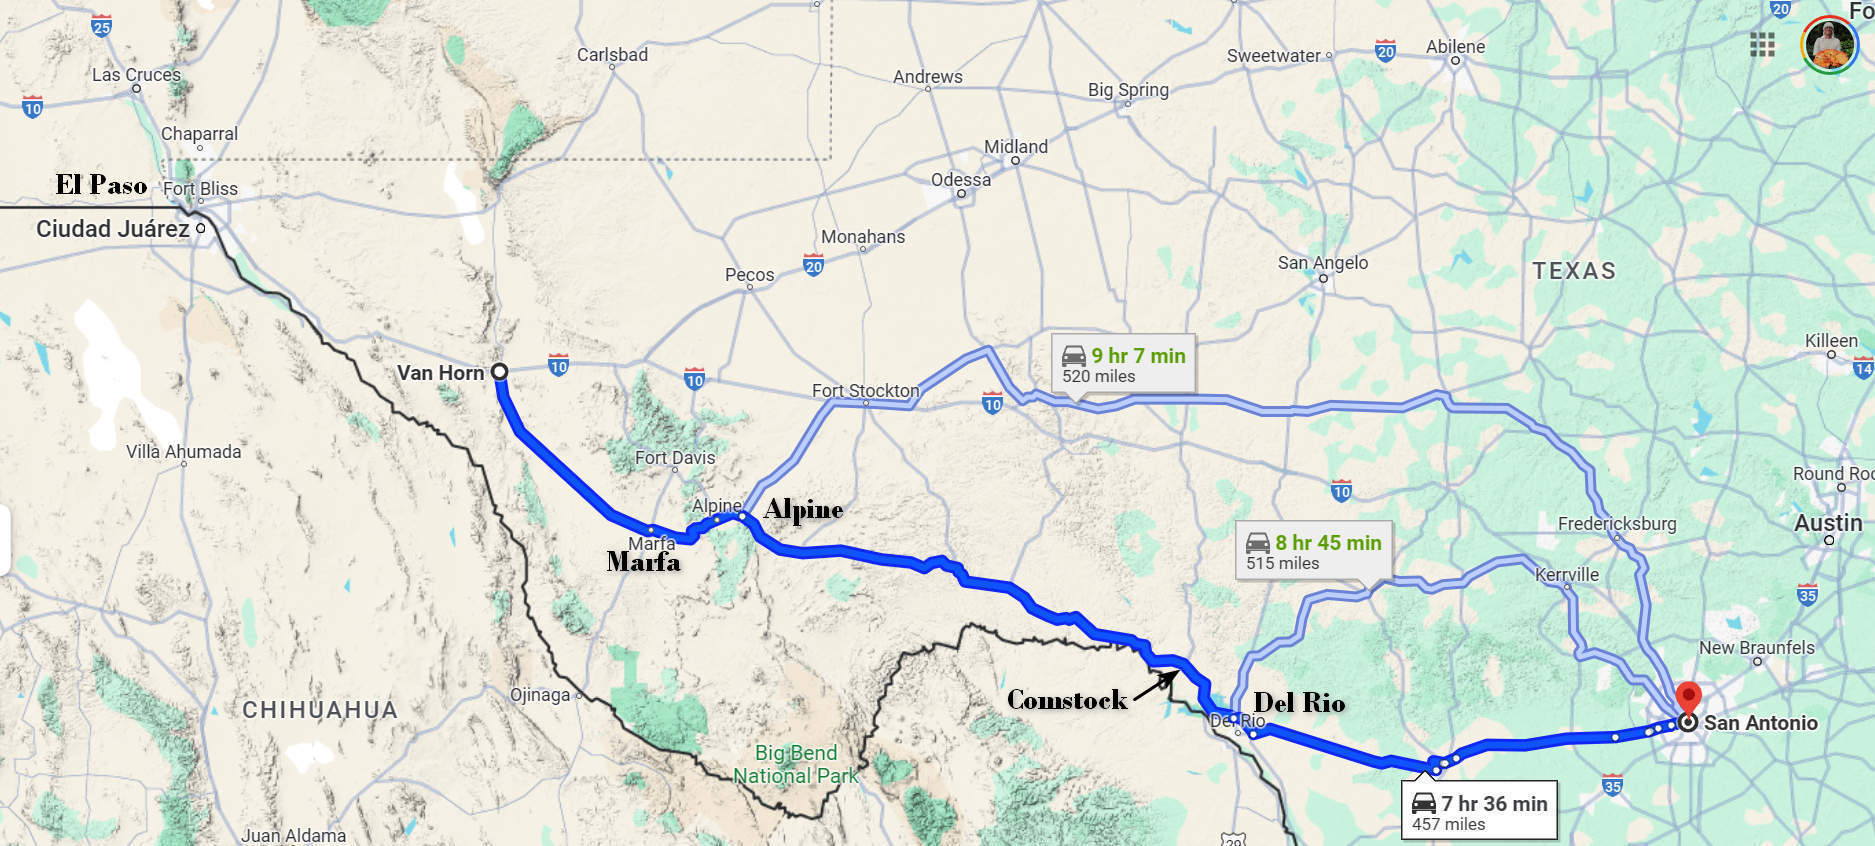 Route from Van Horn to San Antonio TX